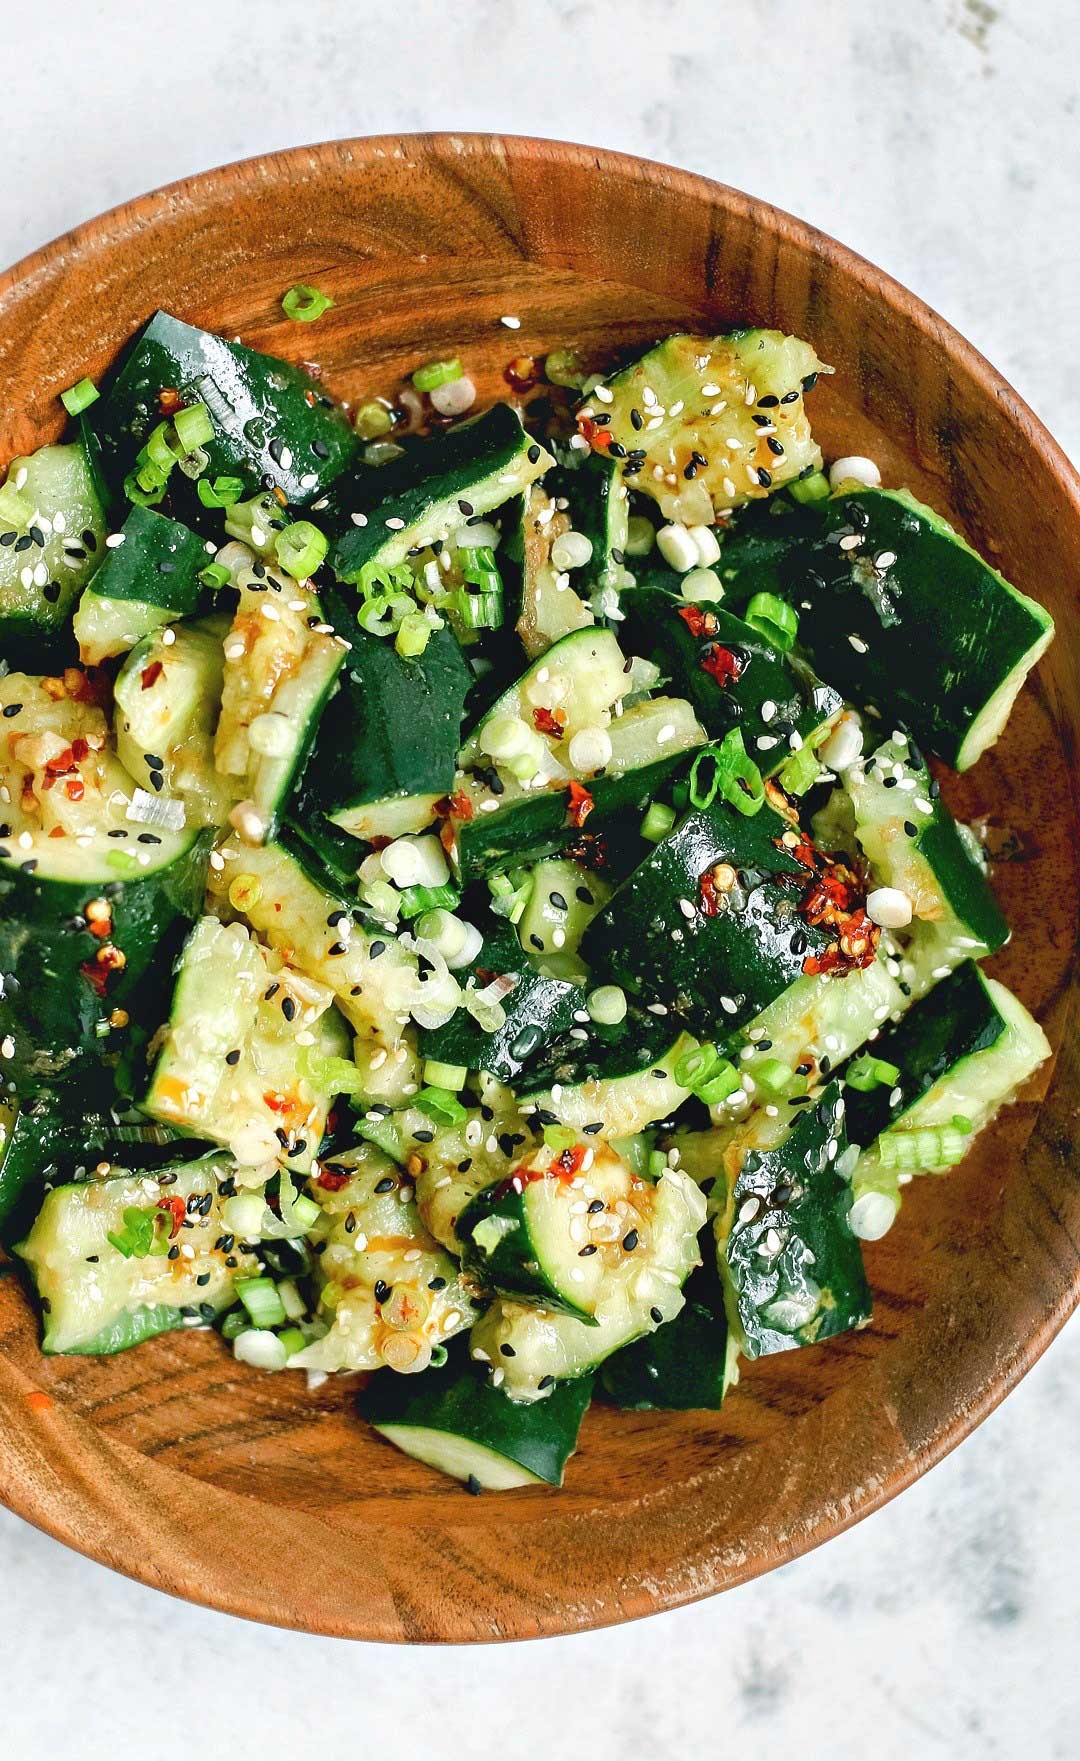 Sichuan cucumber salad